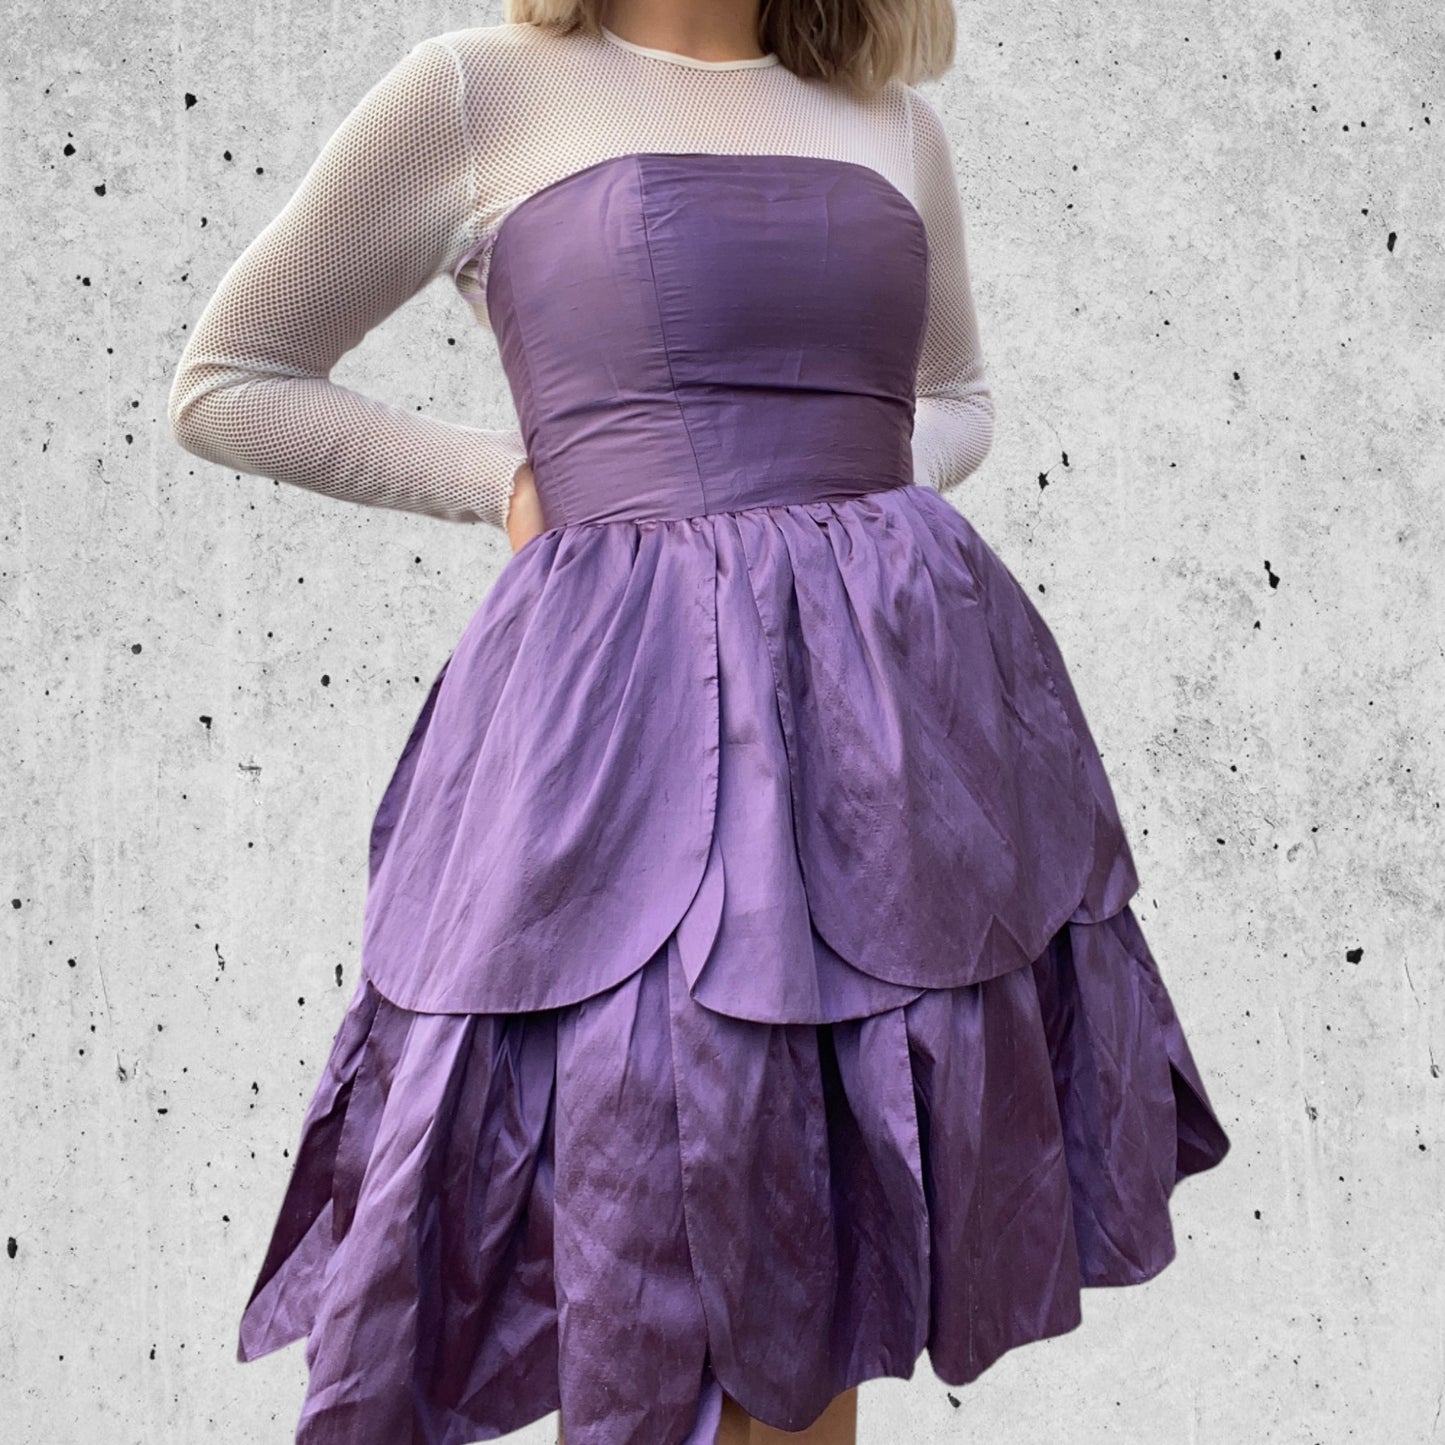 Cassie 80's Dress Size 6-8